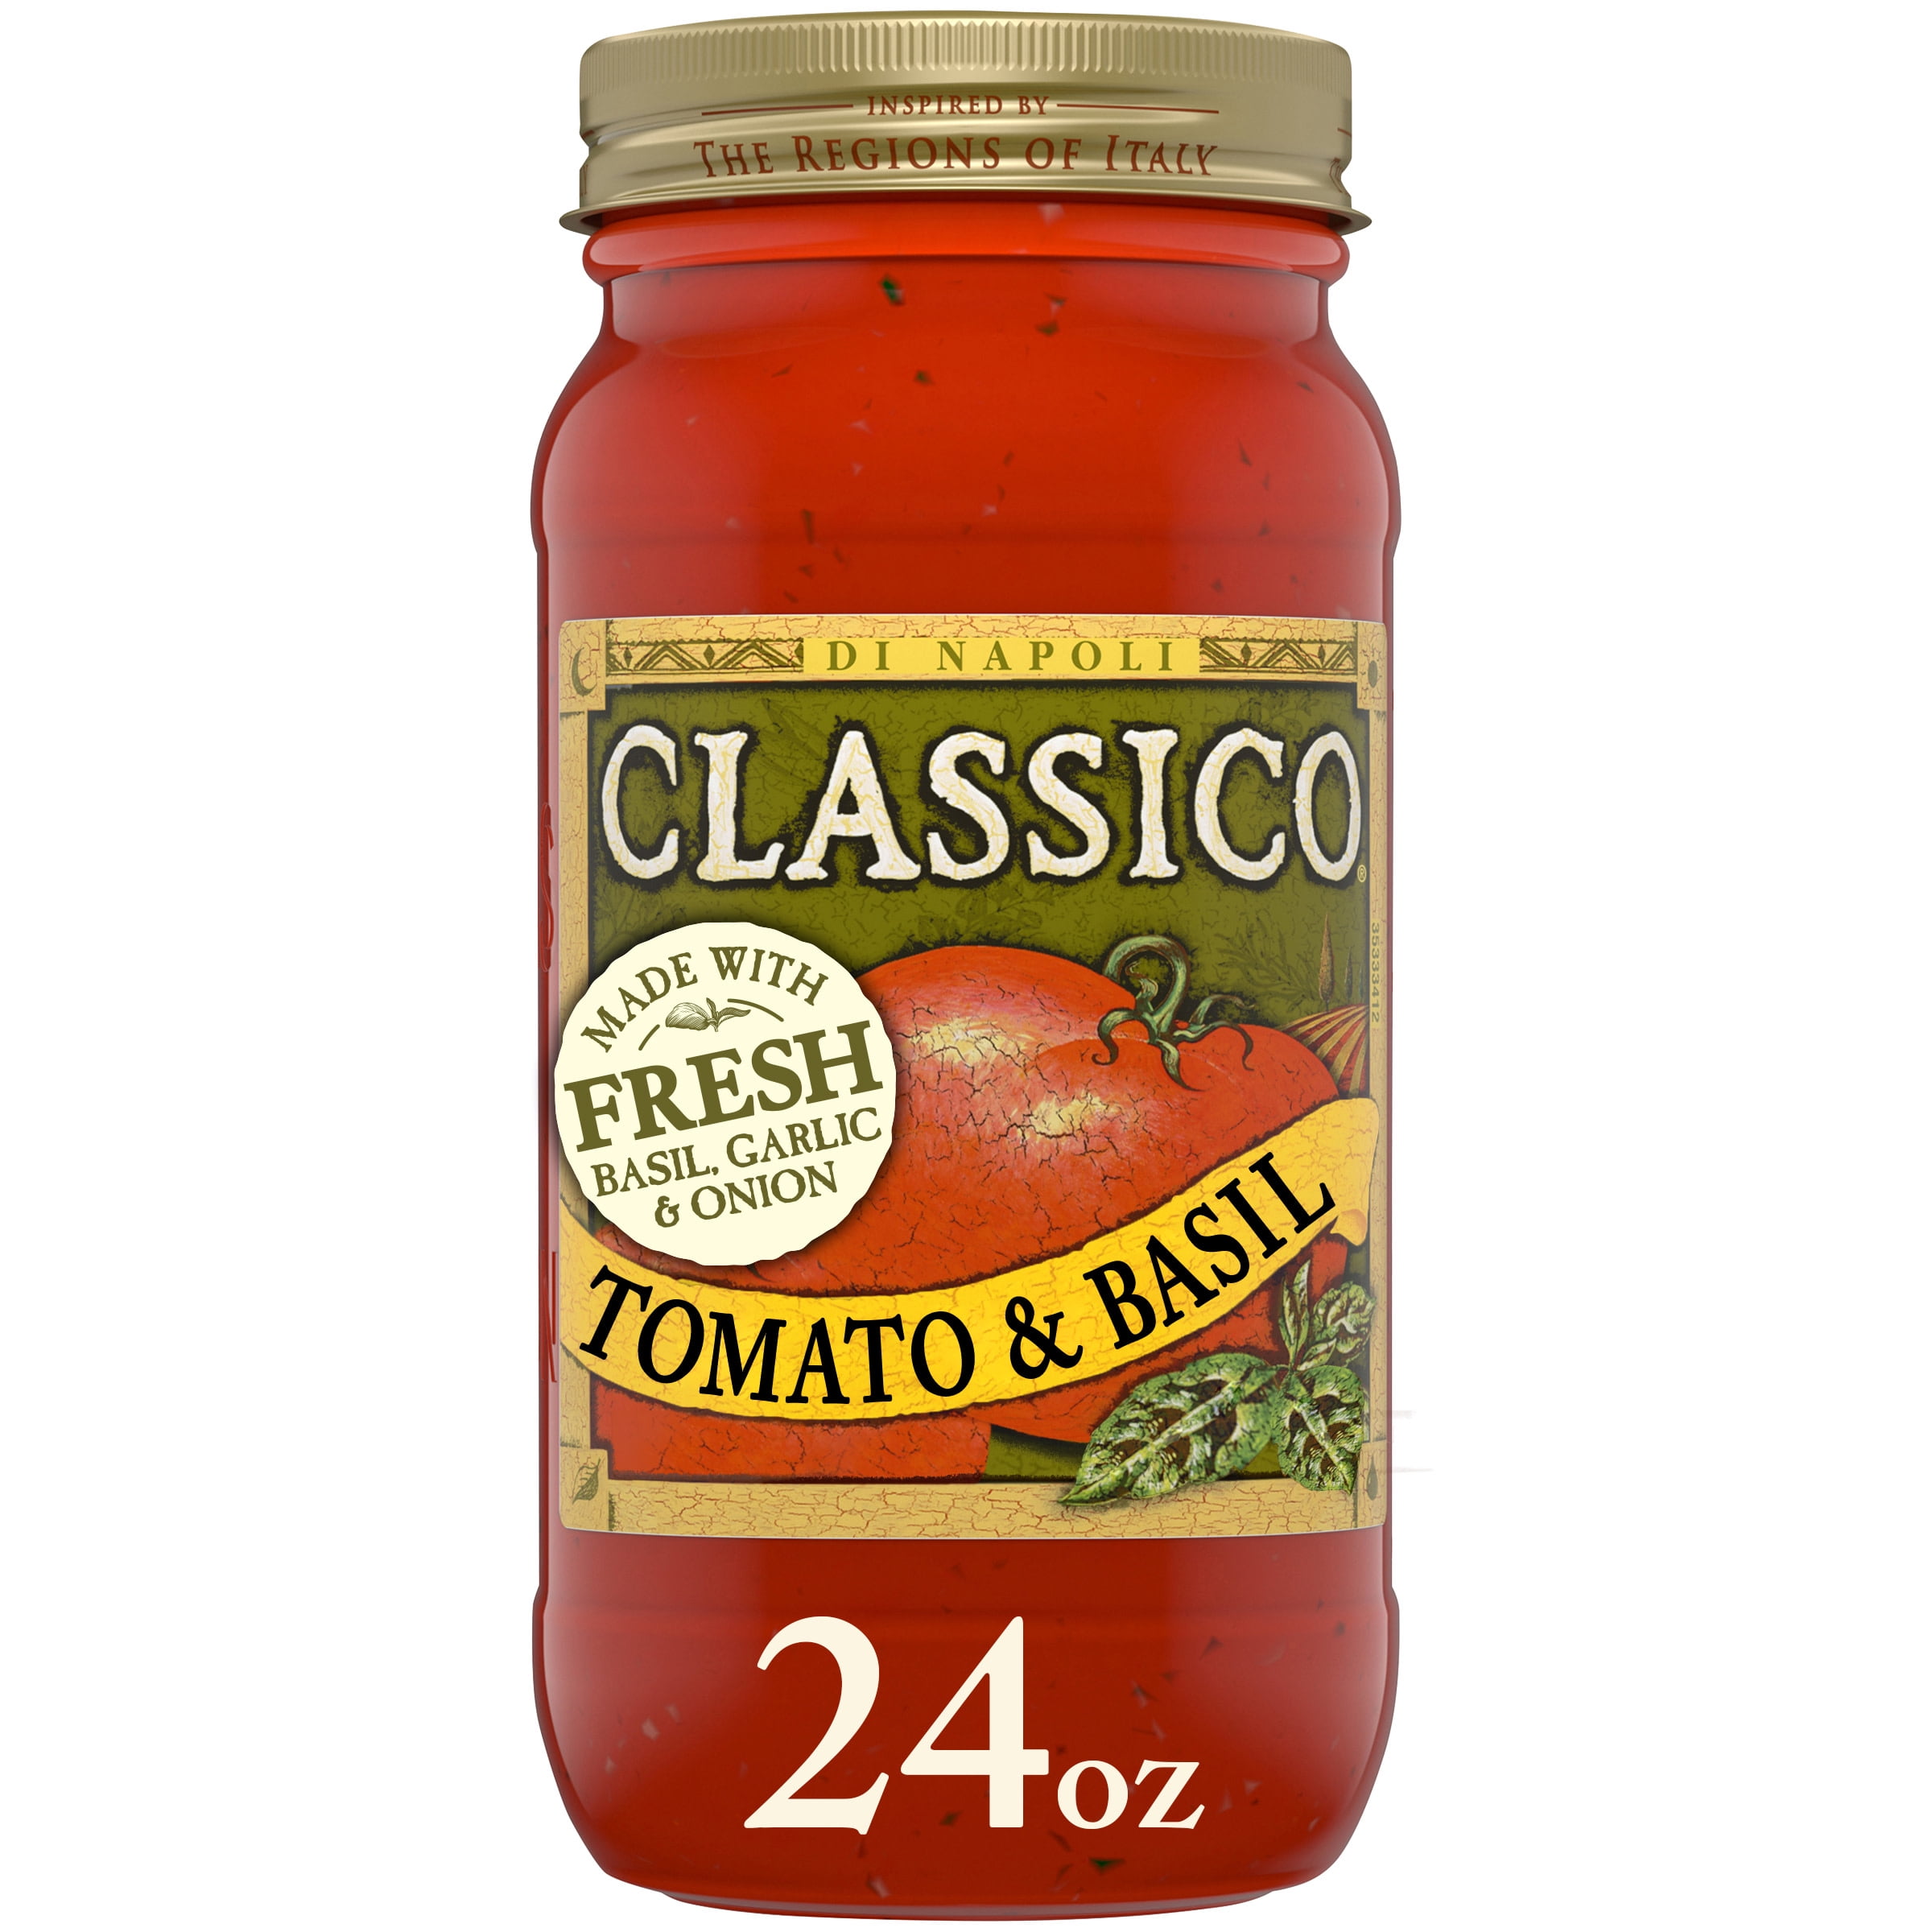 Classico Tomato & Basil Spaghetti Pasta Sauce, 24 oz. Jar